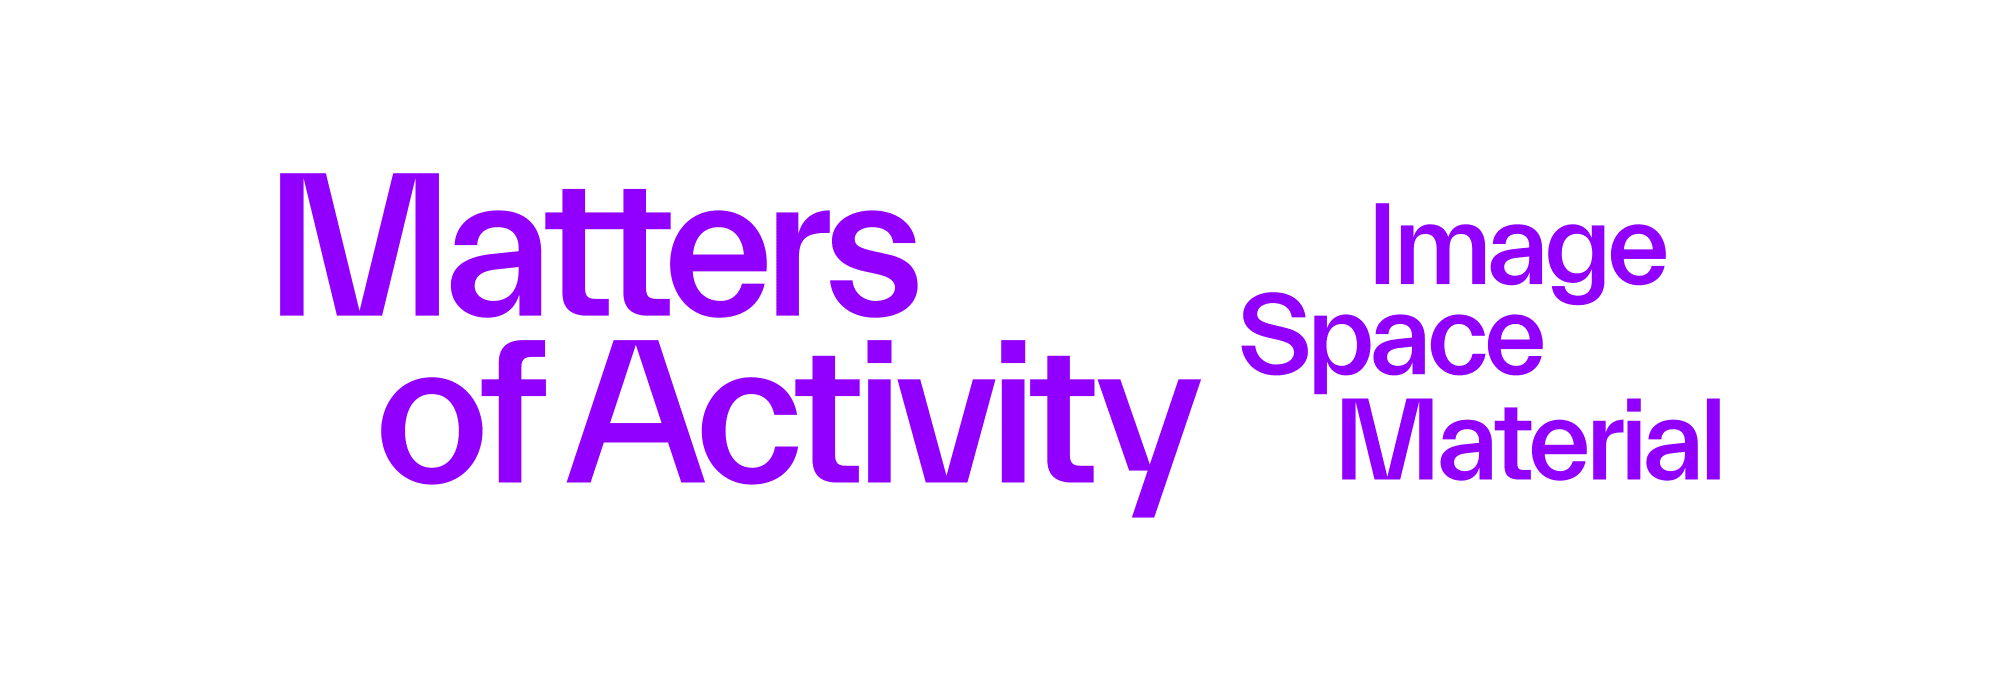 Matters of Activity Logo